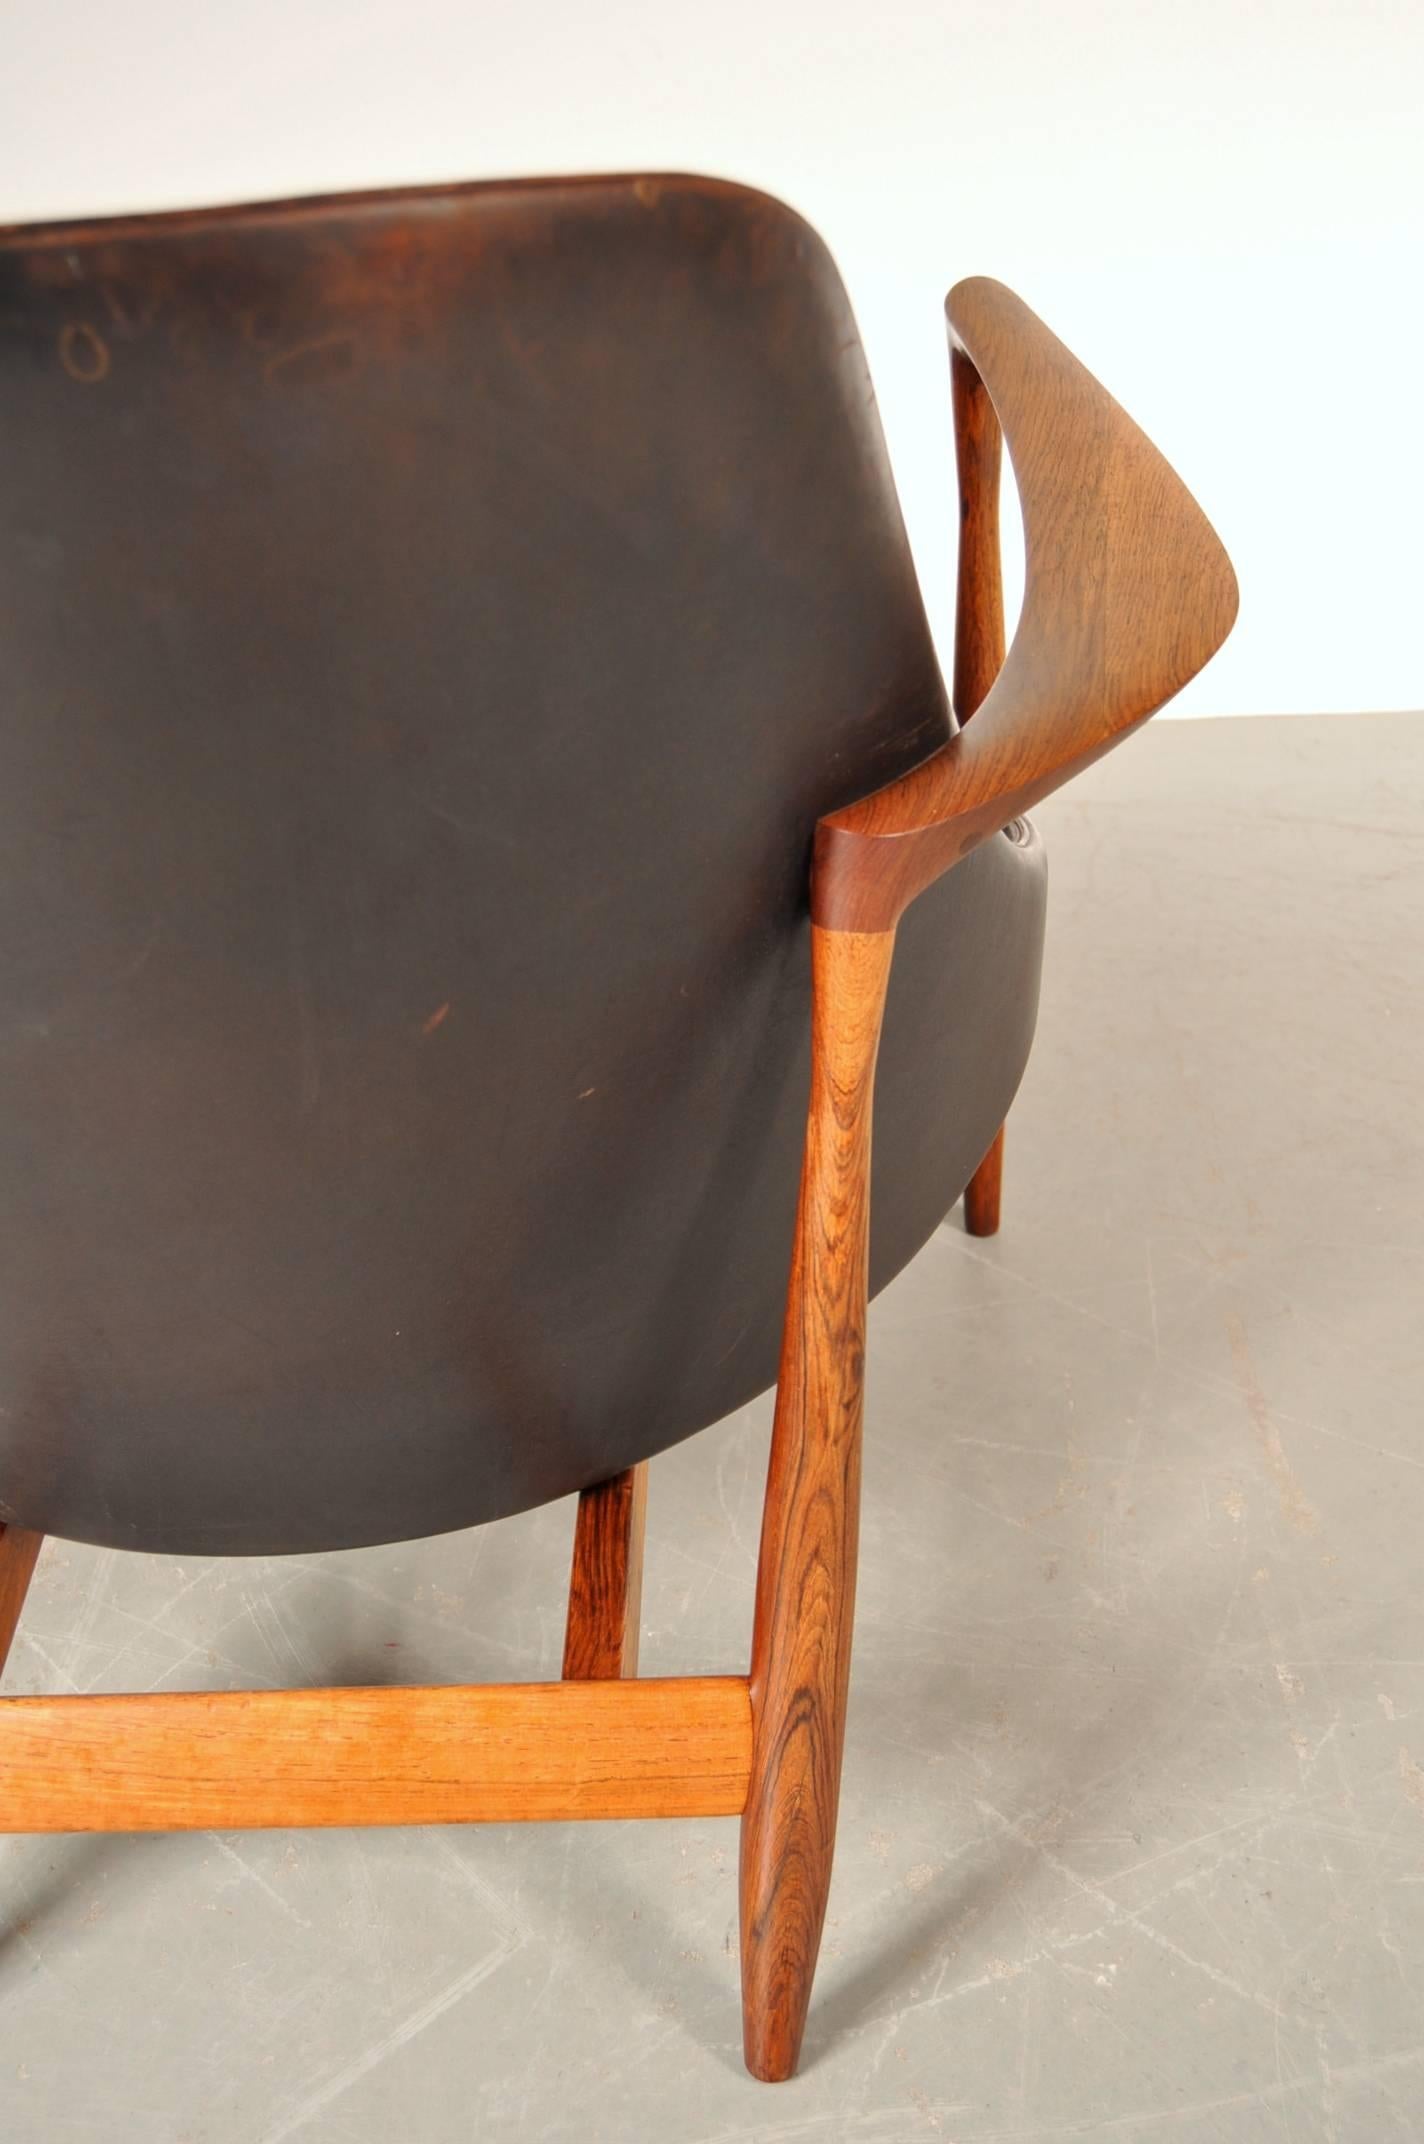 Leather Elizabeth Chair by Ib Kofod-Larsen for Christensen and Larsen, Denmark, 1956